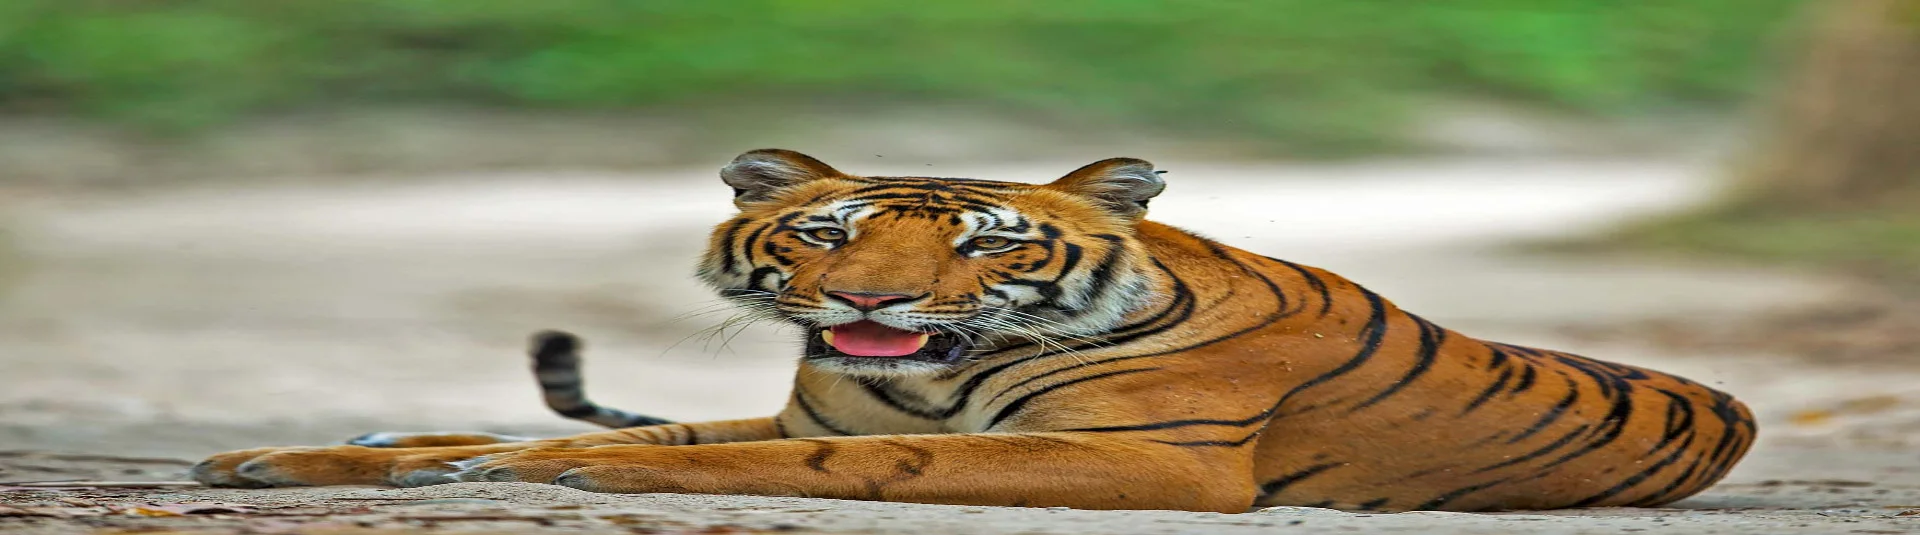 Tiger Safari Slider